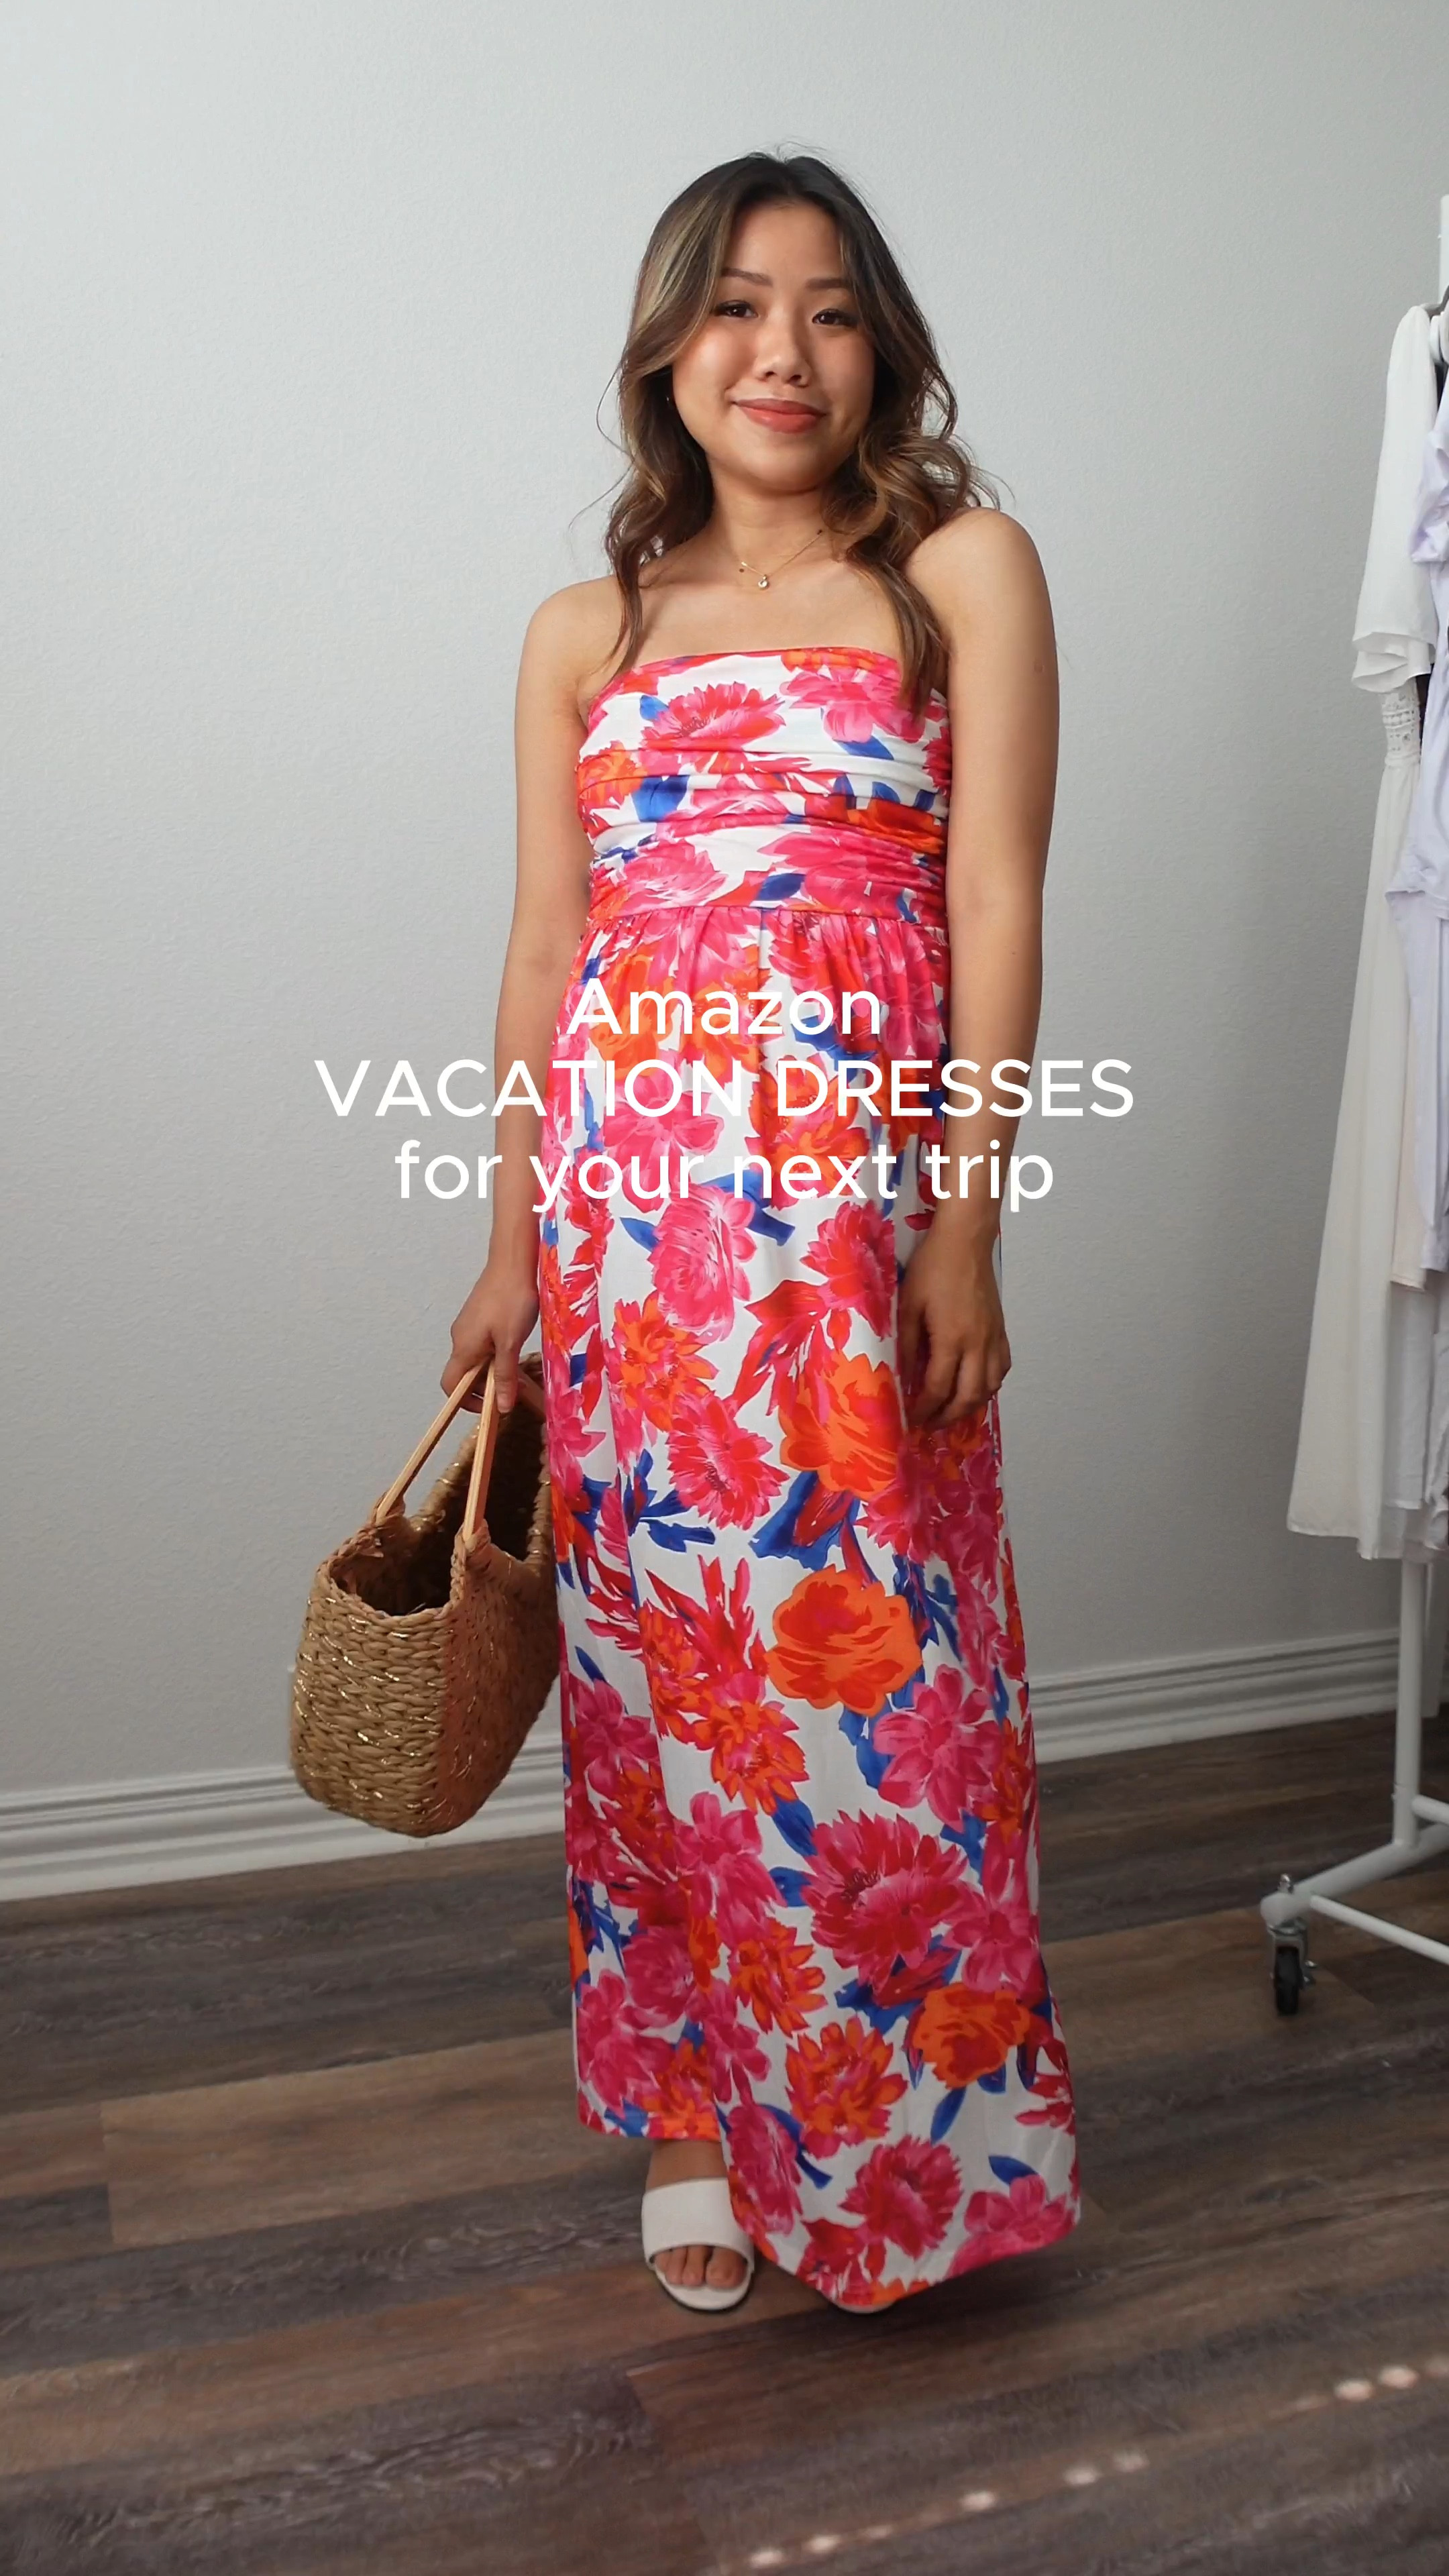 Vacation dresses [Video]  Vacation dresses, Stylish fashion